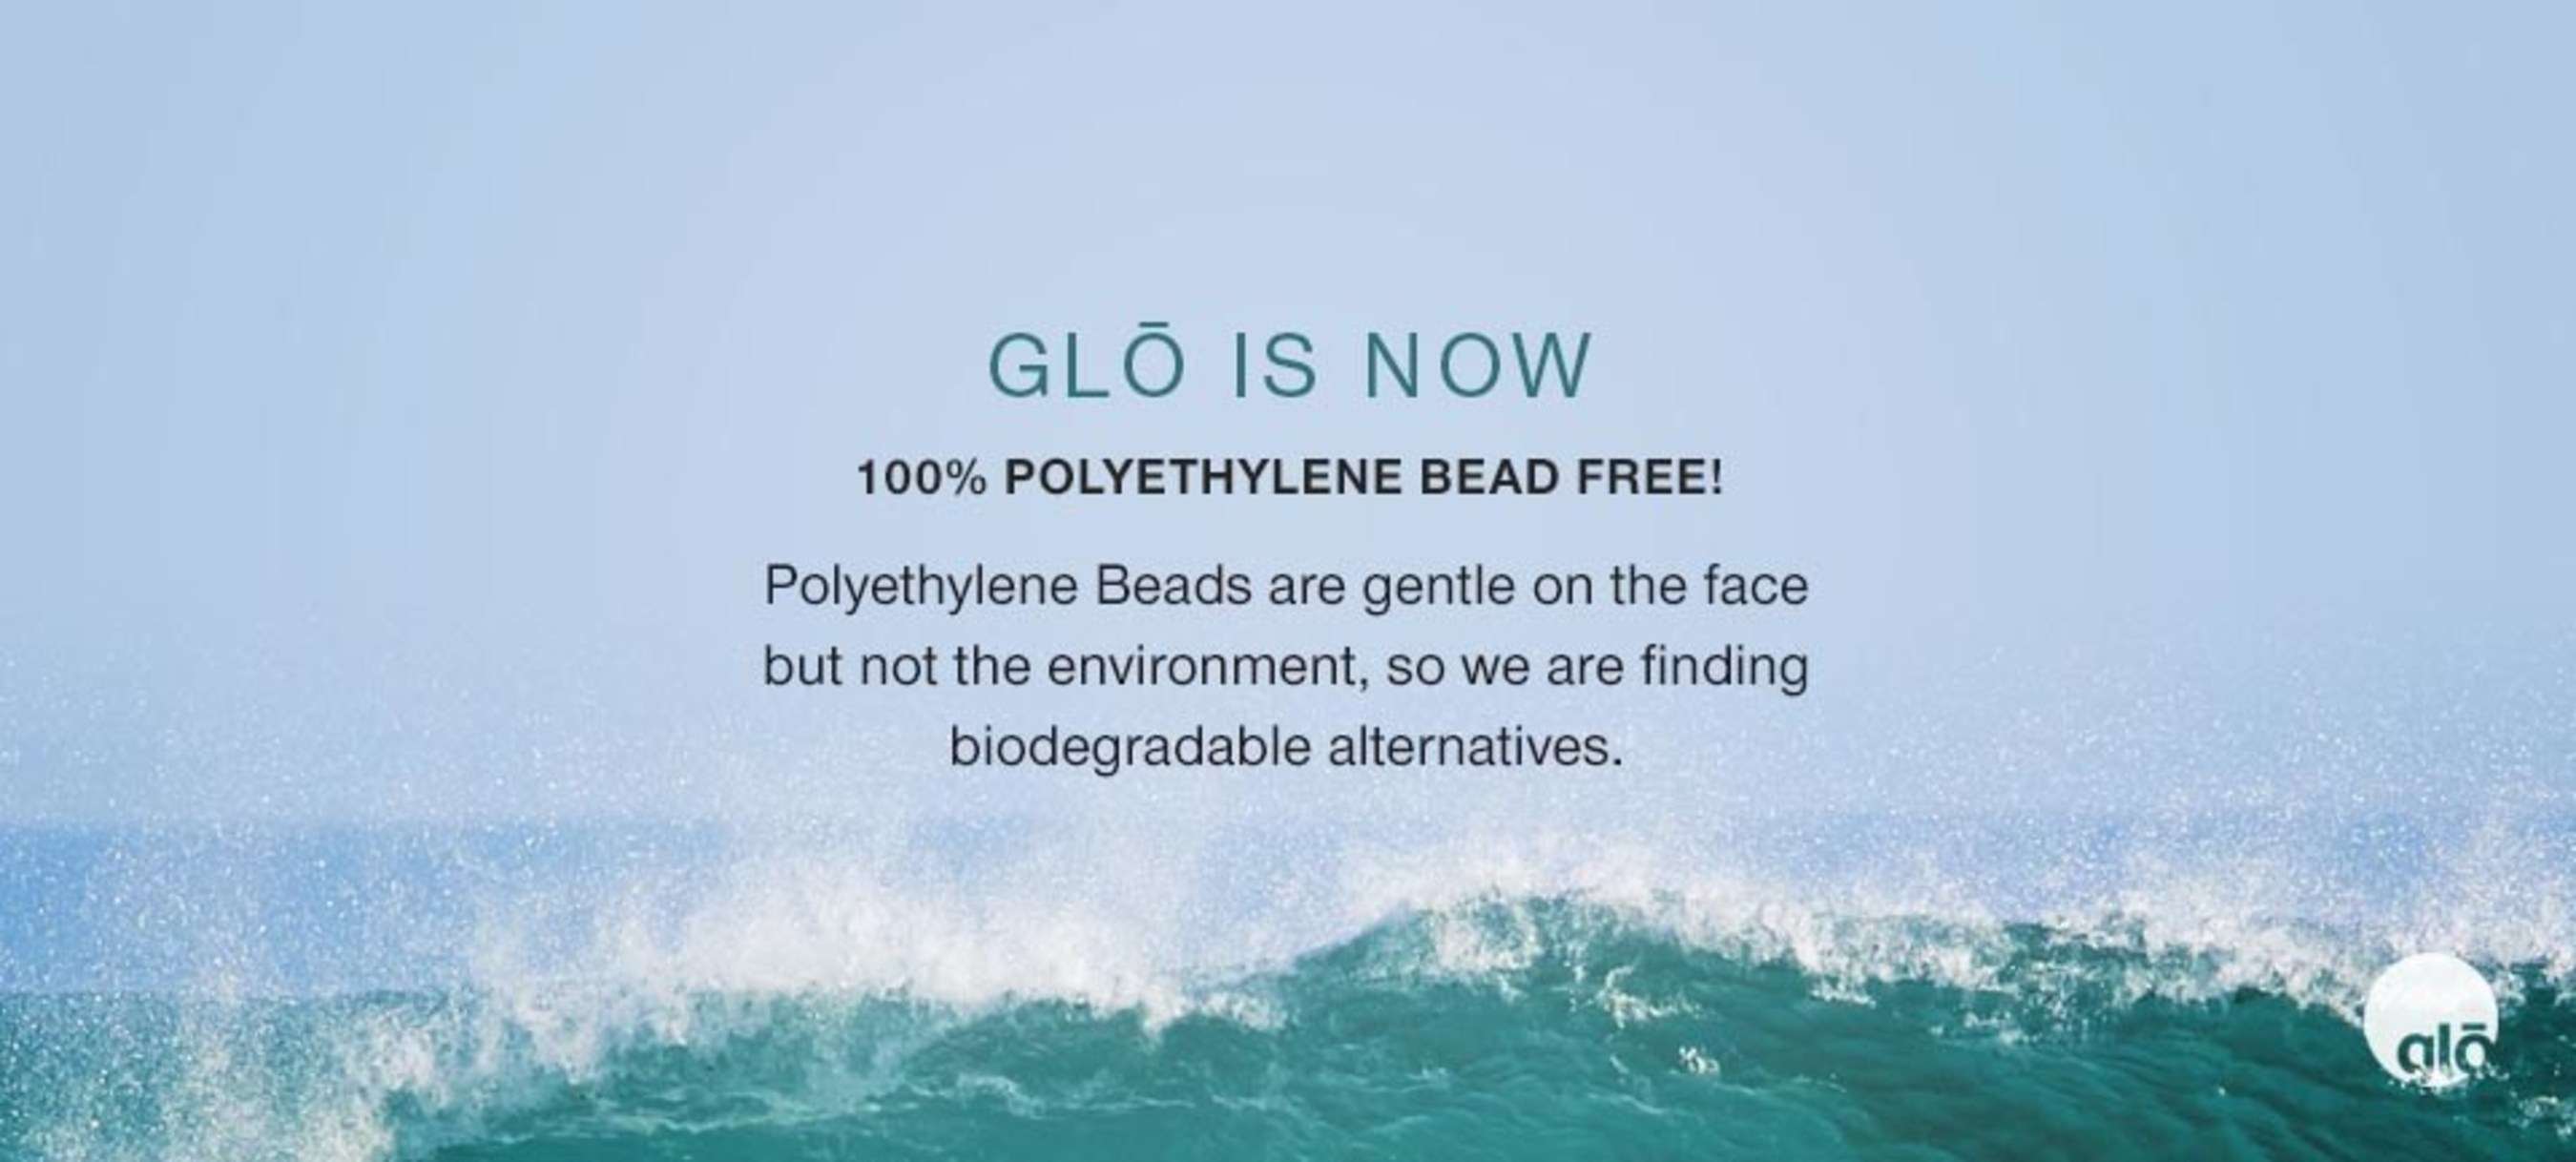 glo is now Polyethylene Bead FREE